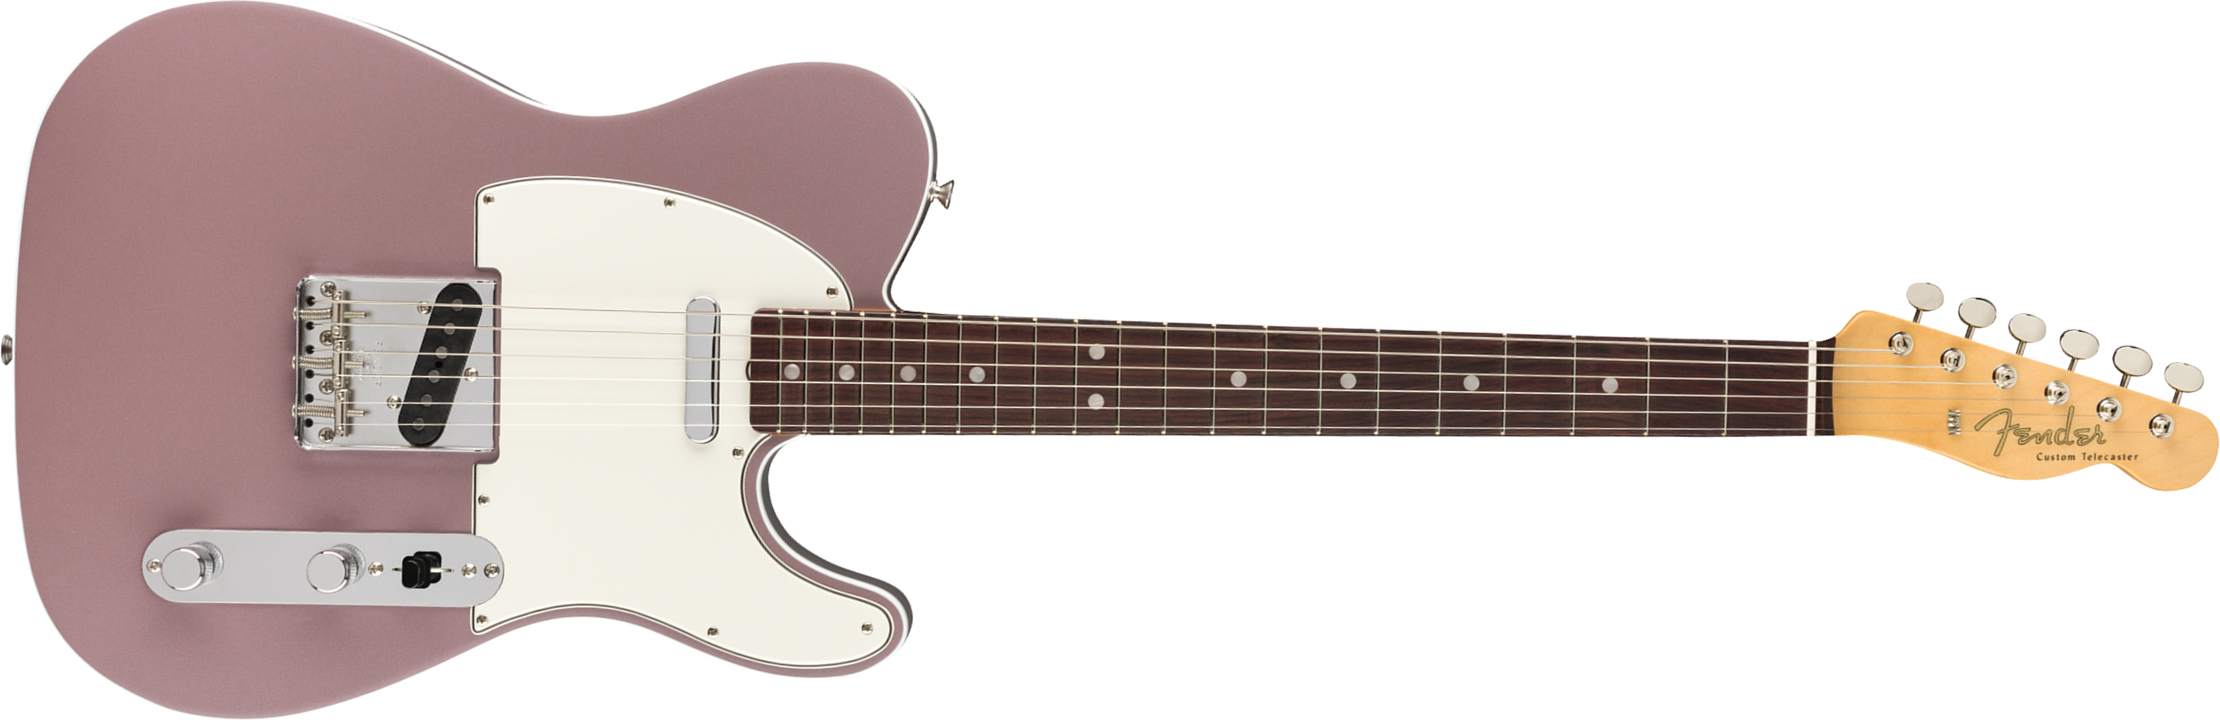 Fender Tele '60s American Original Usa Ss Rw - Burgundy Mist Metallic - Televorm elektrische gitaar - Main picture